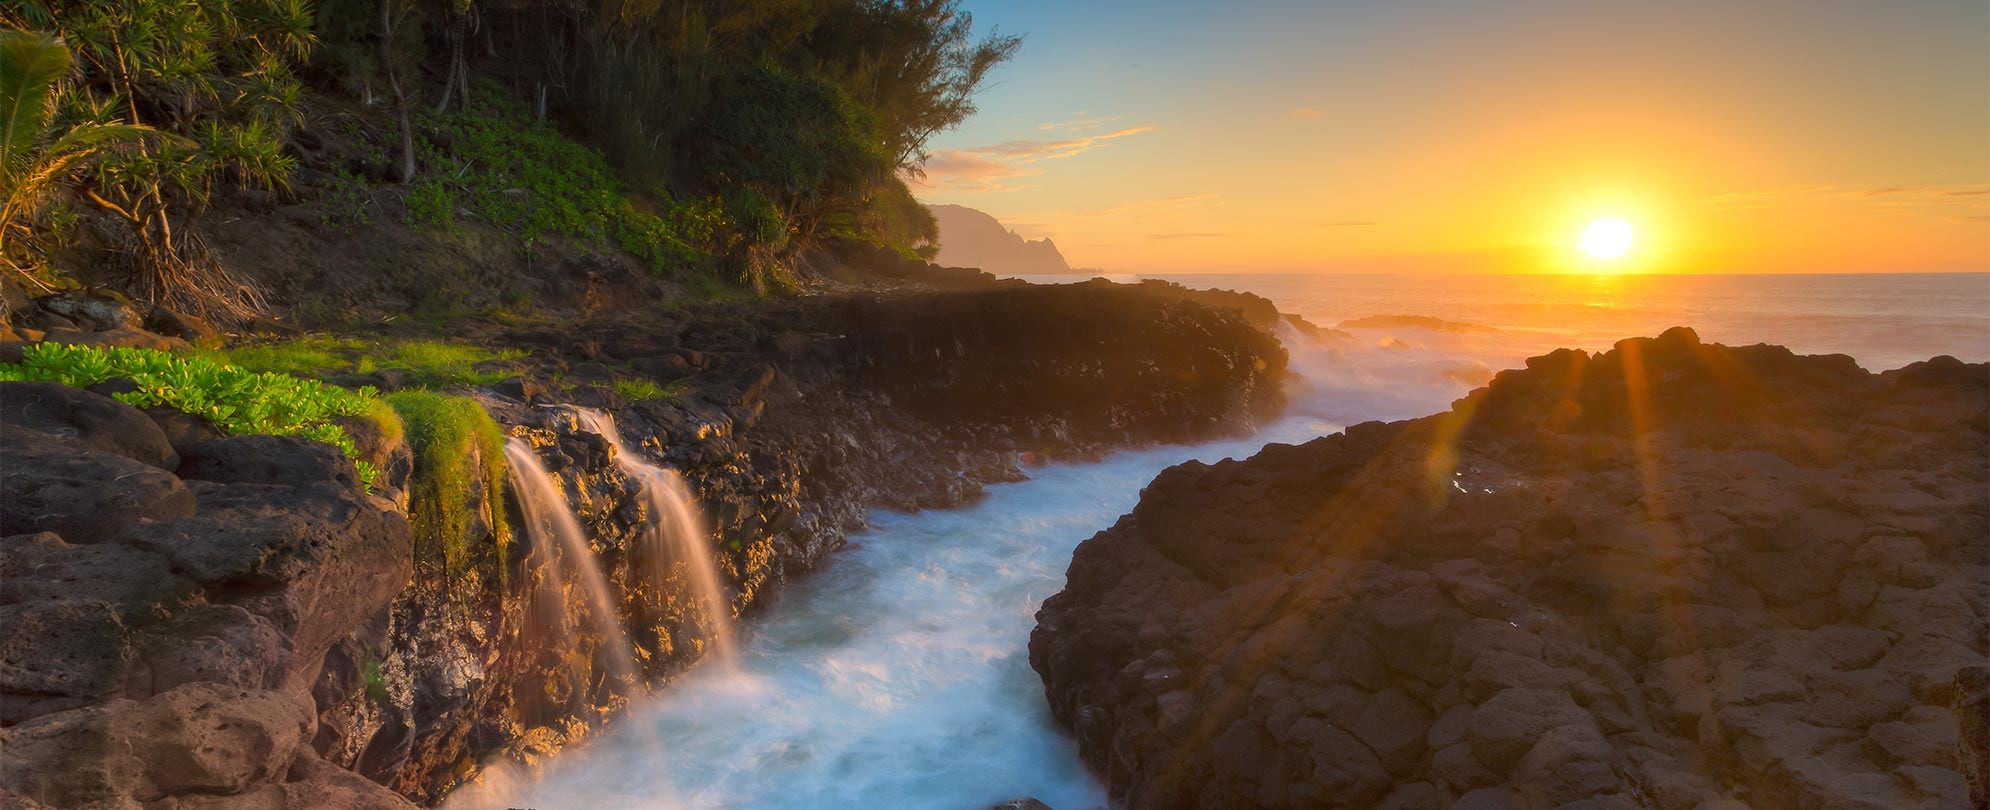 The sun sets over the ocean shining on the rocky coast of Princeville, Kauai in Hawaii